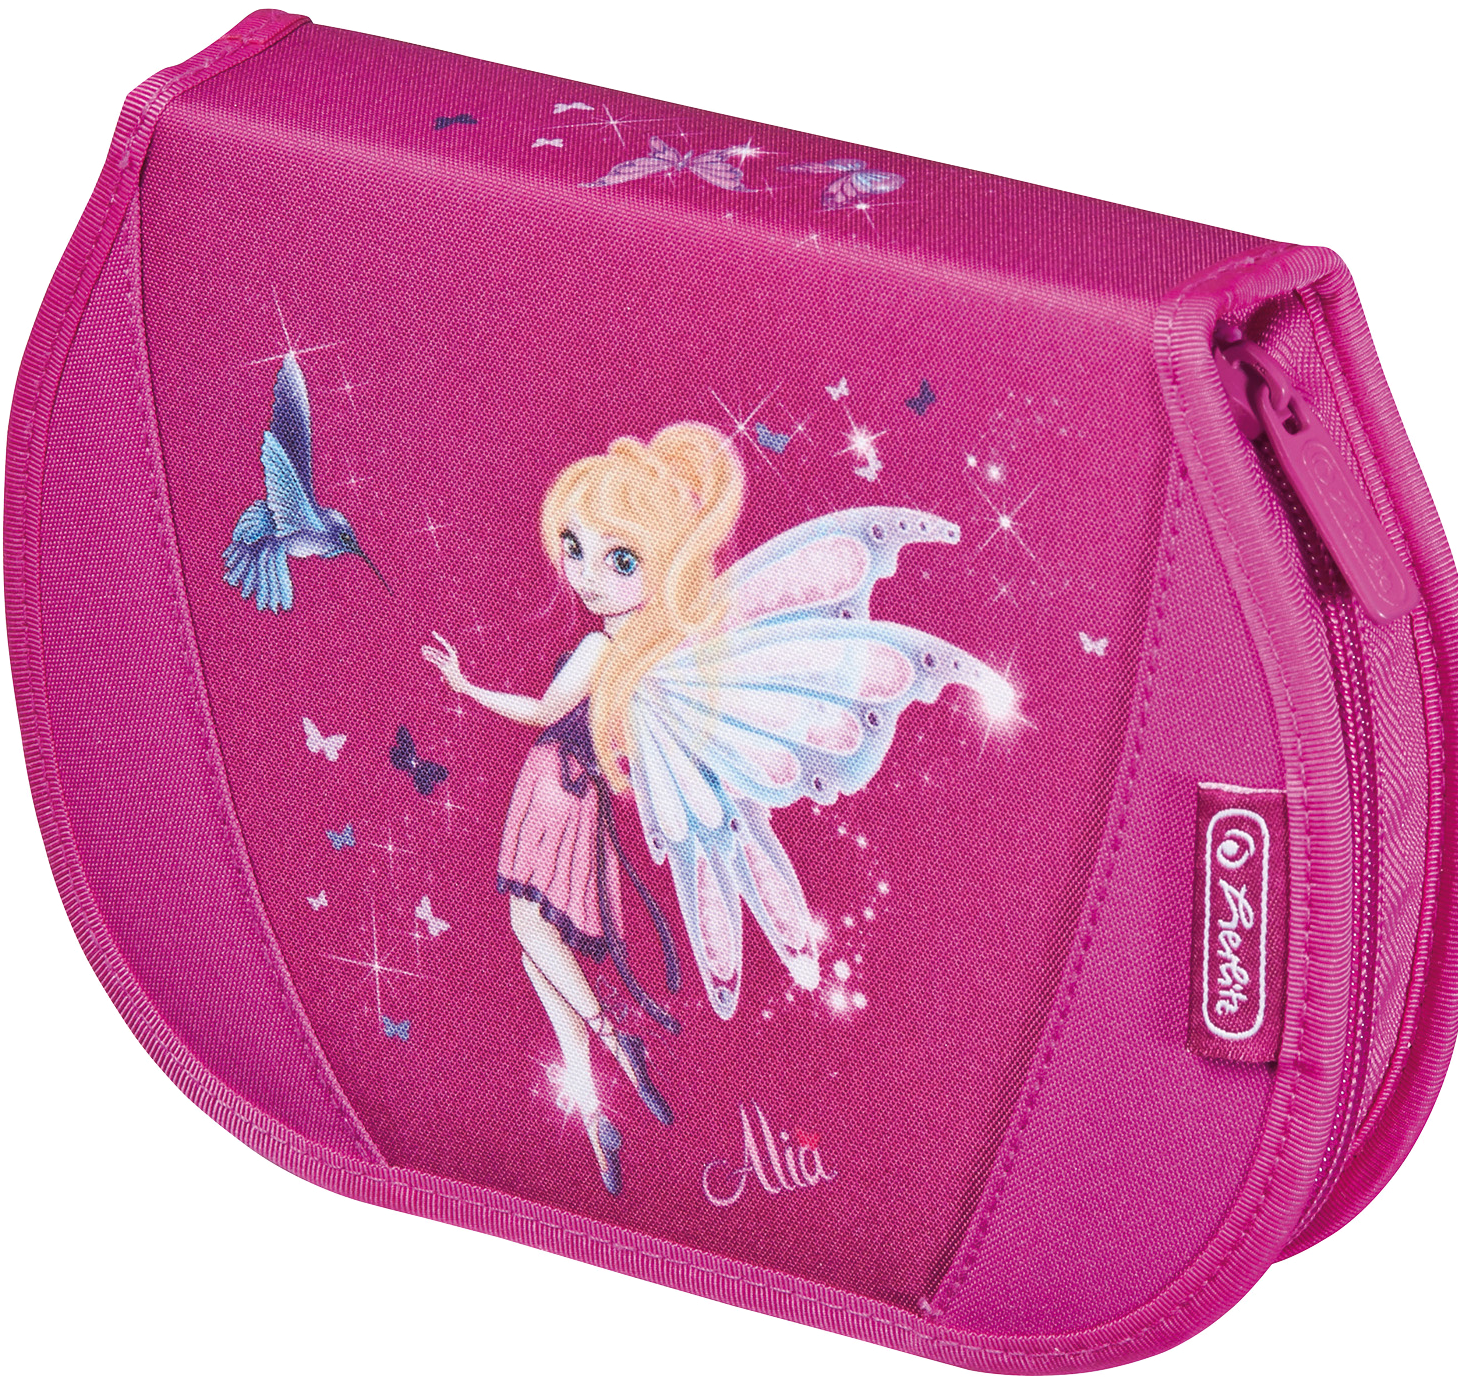 A Pink Bag With A Cartoon Fairy